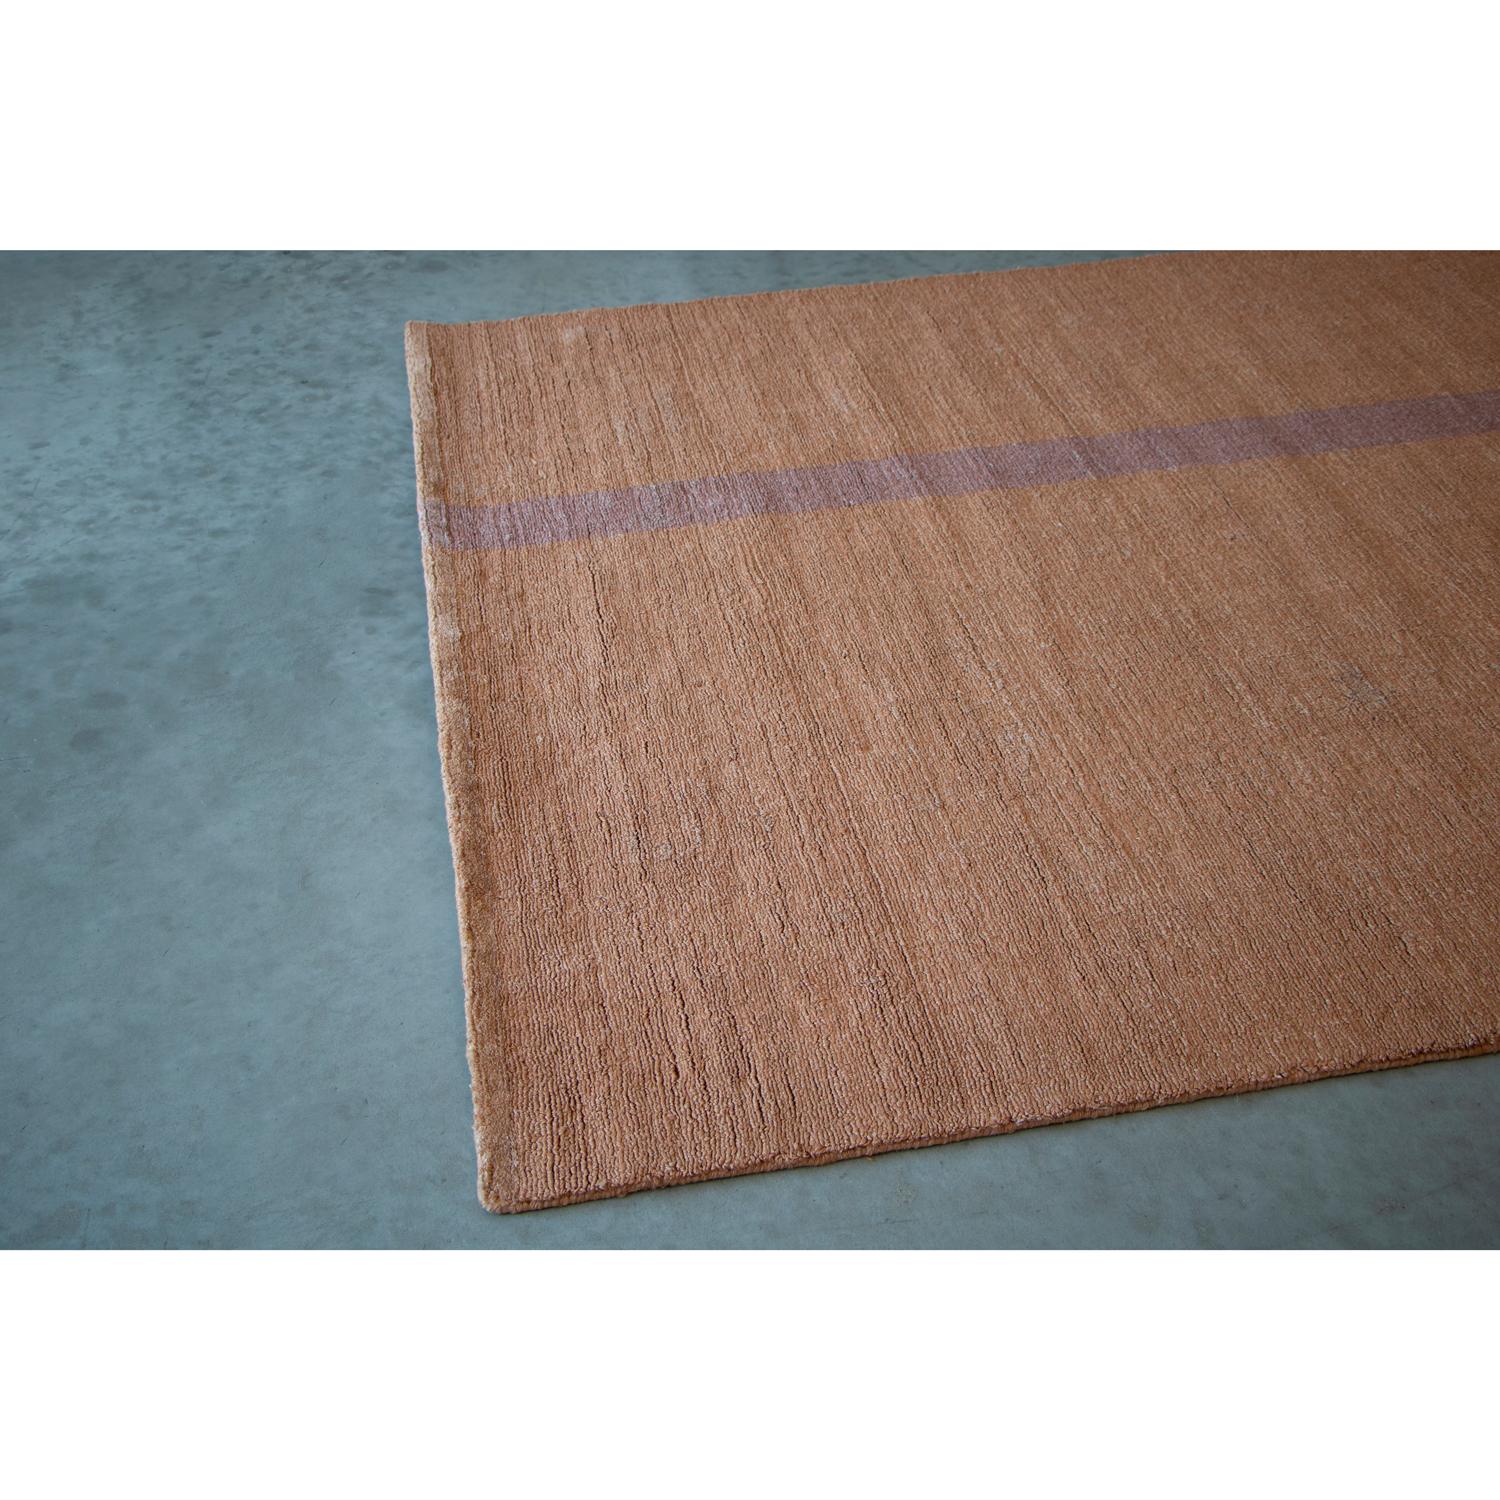 Modern 21st Century Neutral Tones Natural Linen Rug by Deanna Comellini 150x250 cm For Sale